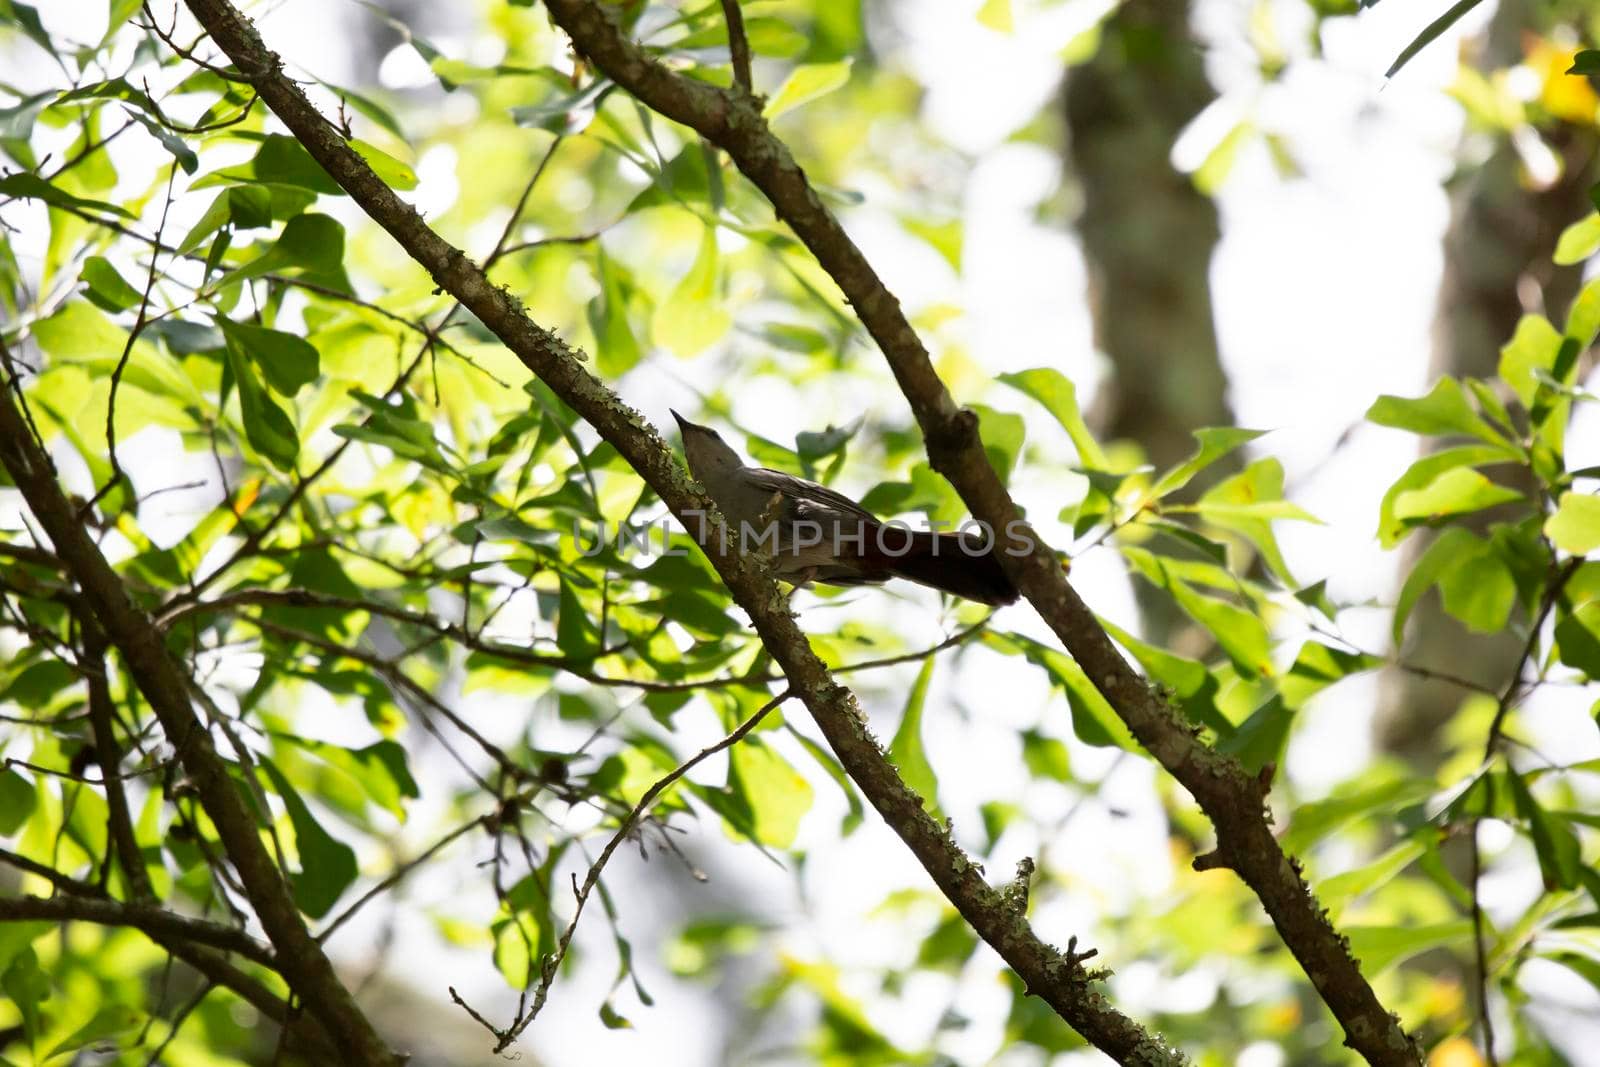 Gray catbird (Dumetella carolinensis) looking around from its perch on a tree limb